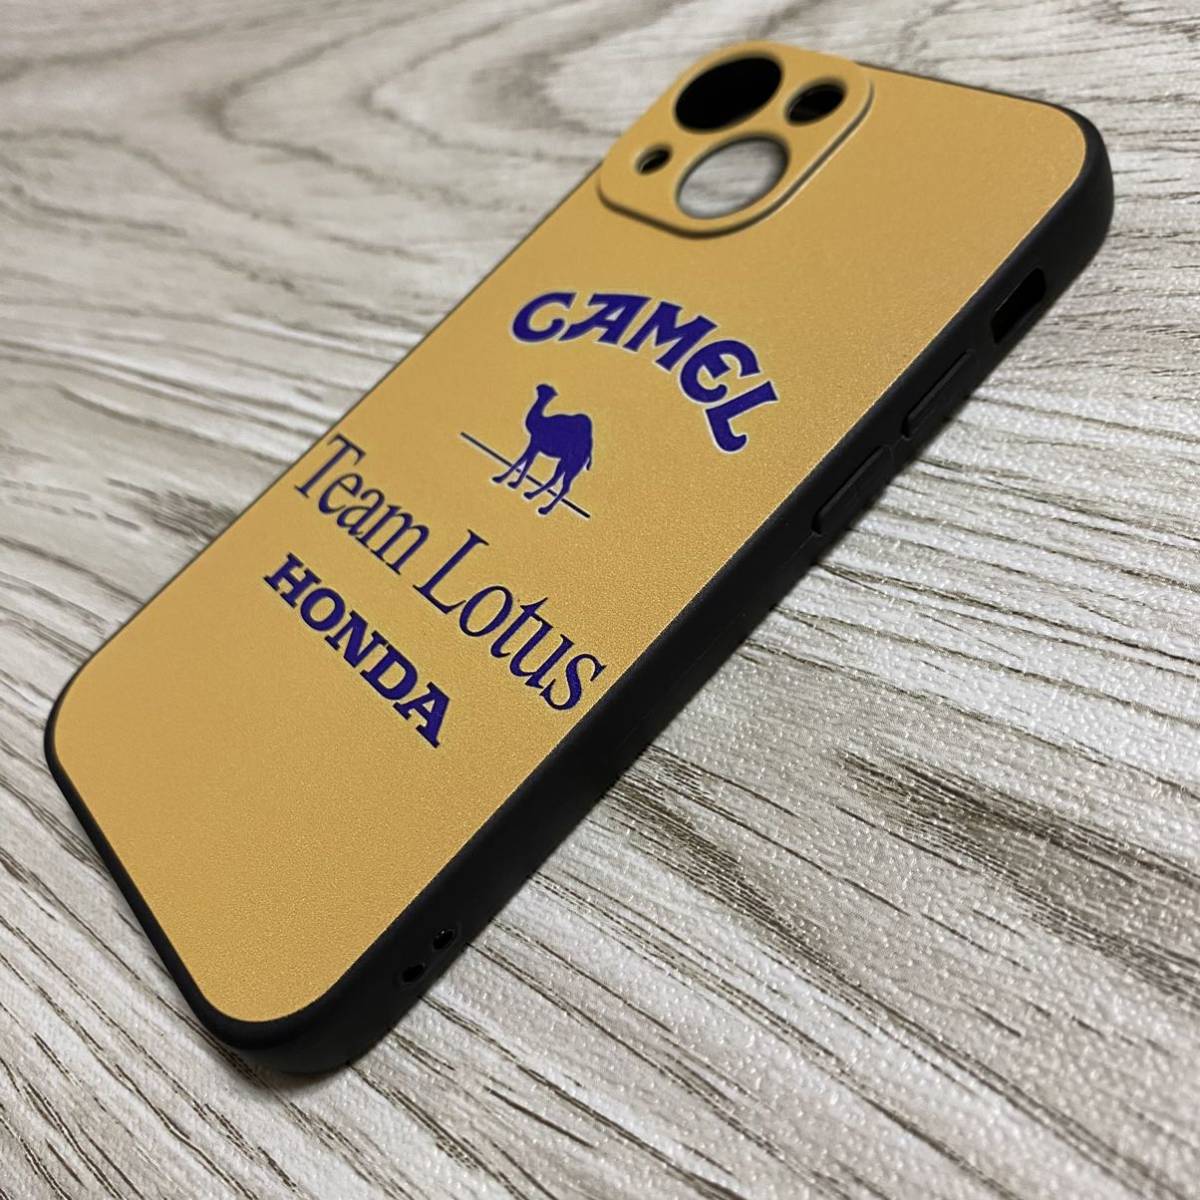  Camel Lotus Honda iPhone 13 mini case F1 i-ll ton * Senna smartphone 